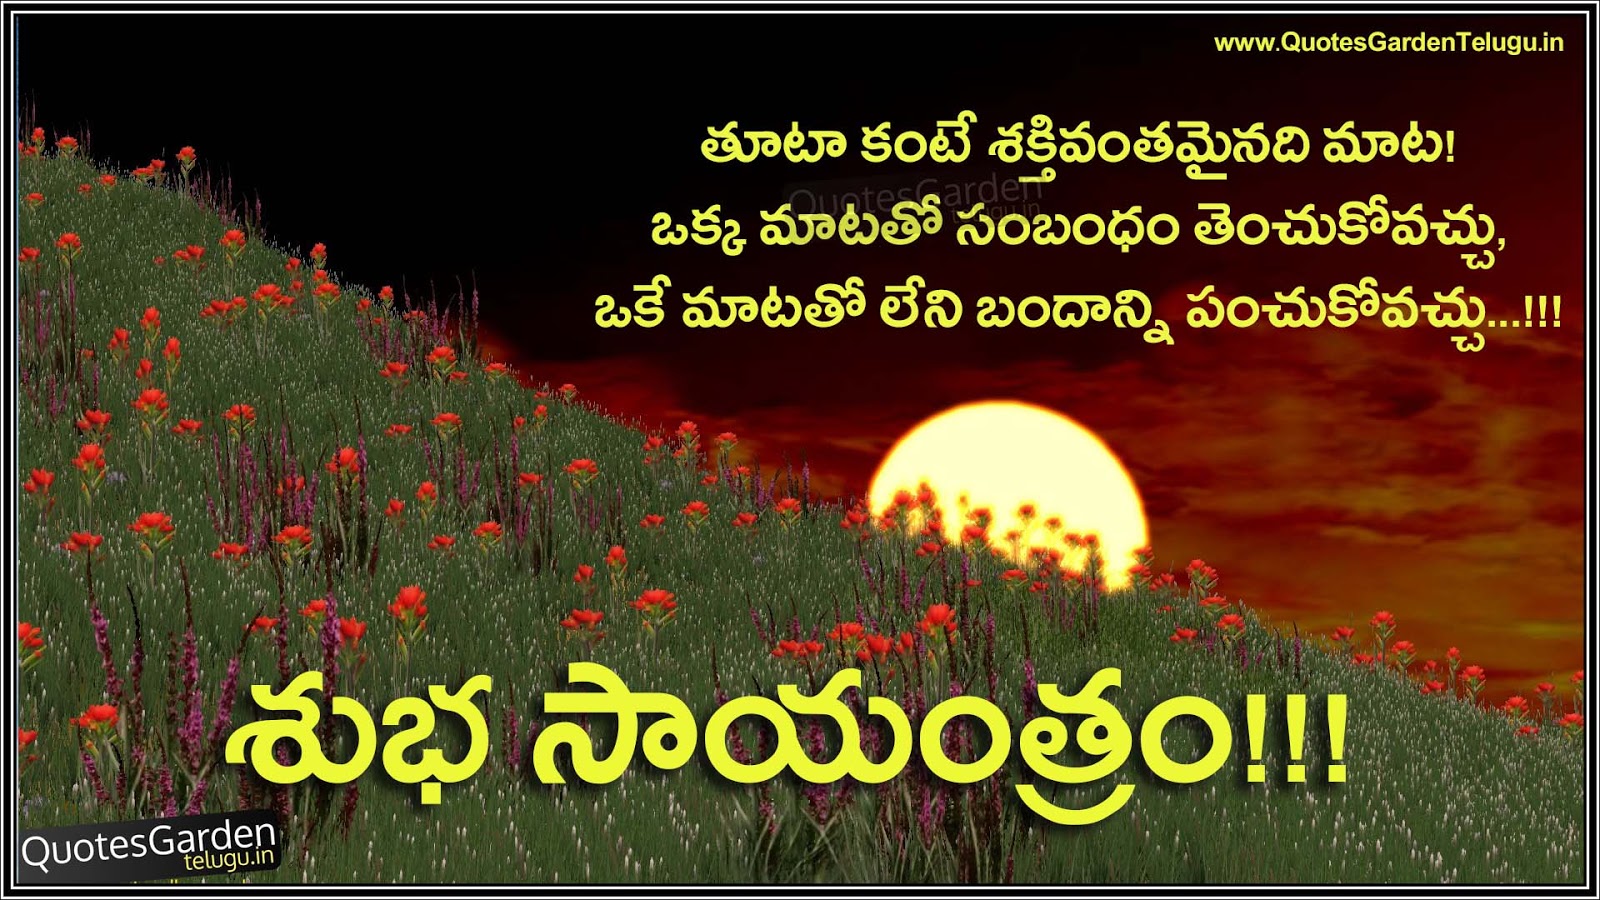 Best Telugu Good evening sms with Quotes | QUOTES GARDEN TELUGU ...